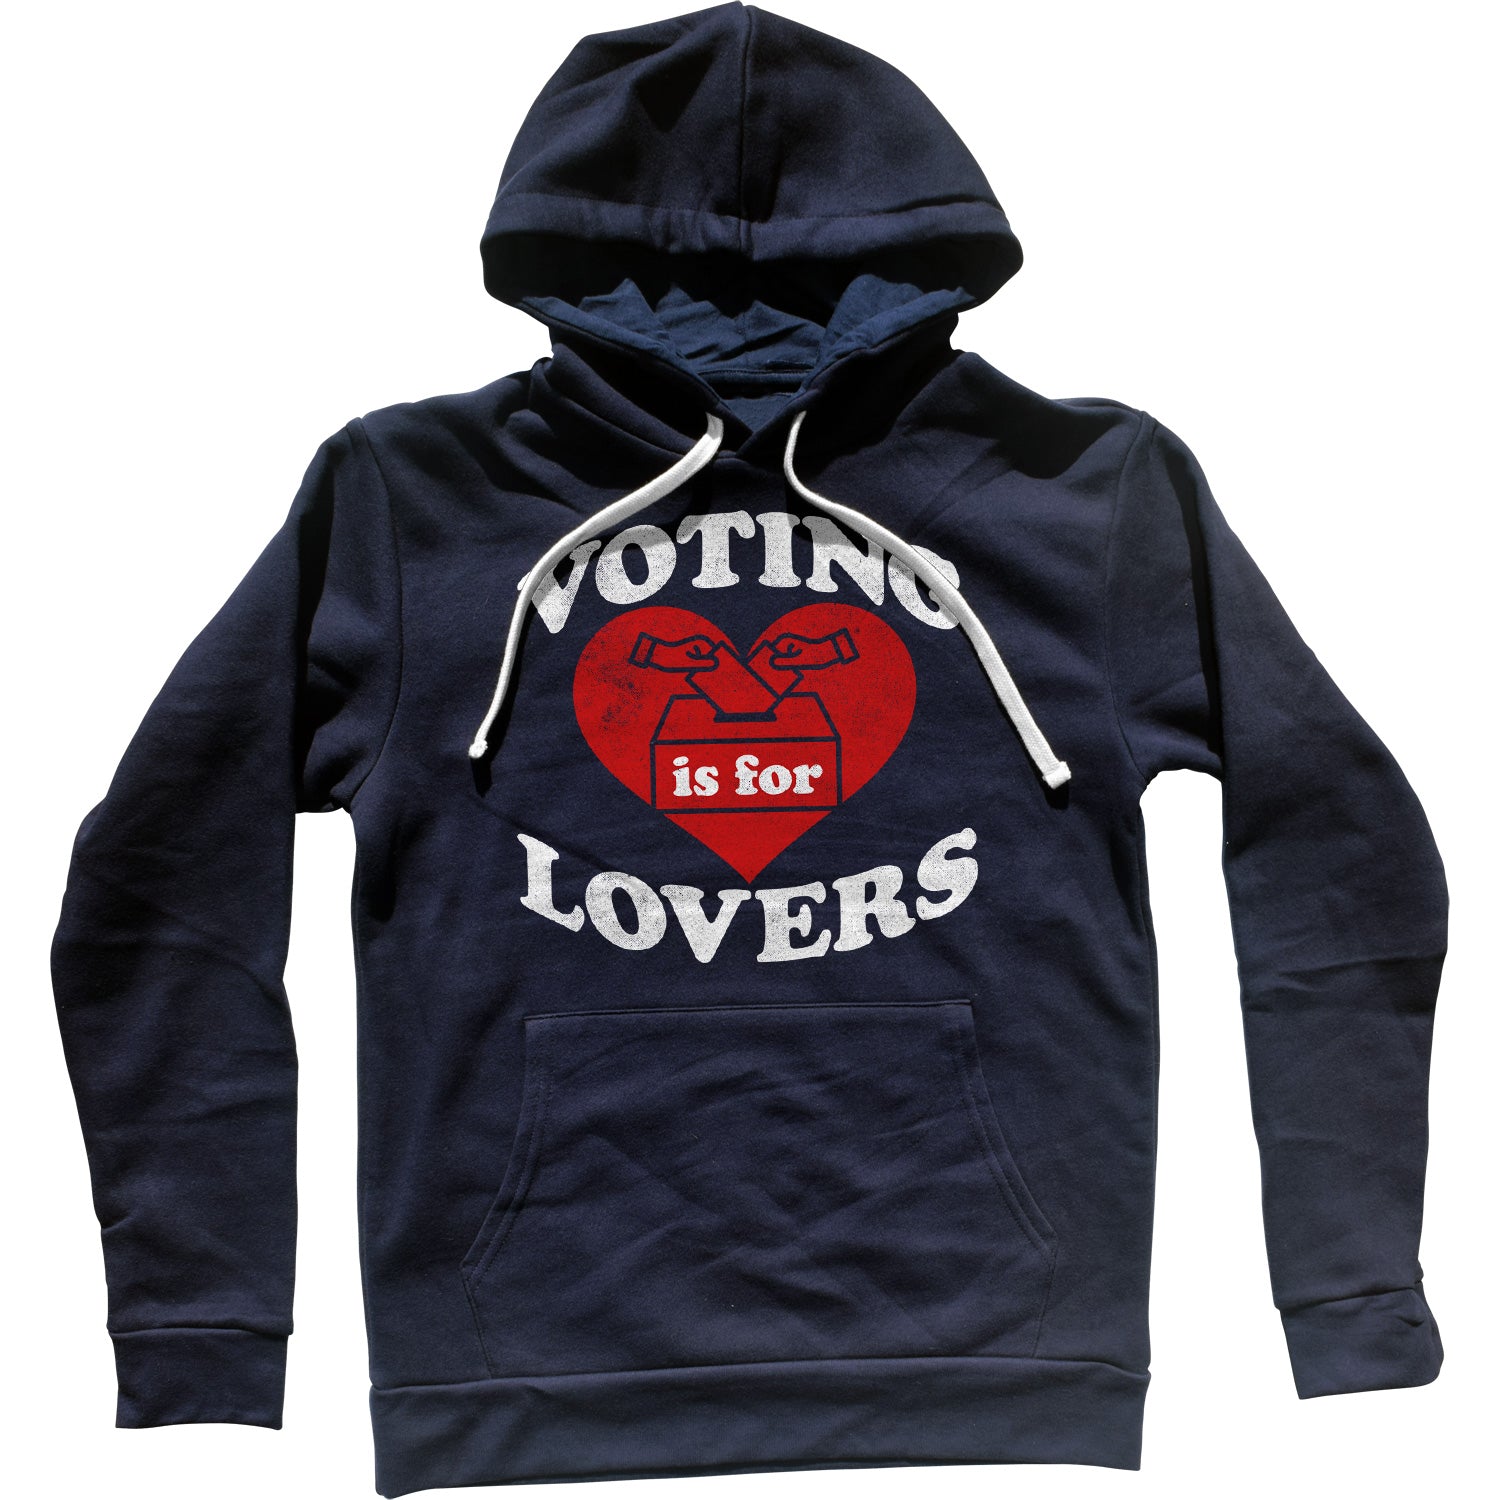 Voting Is For Lovers Unisex Hoodie